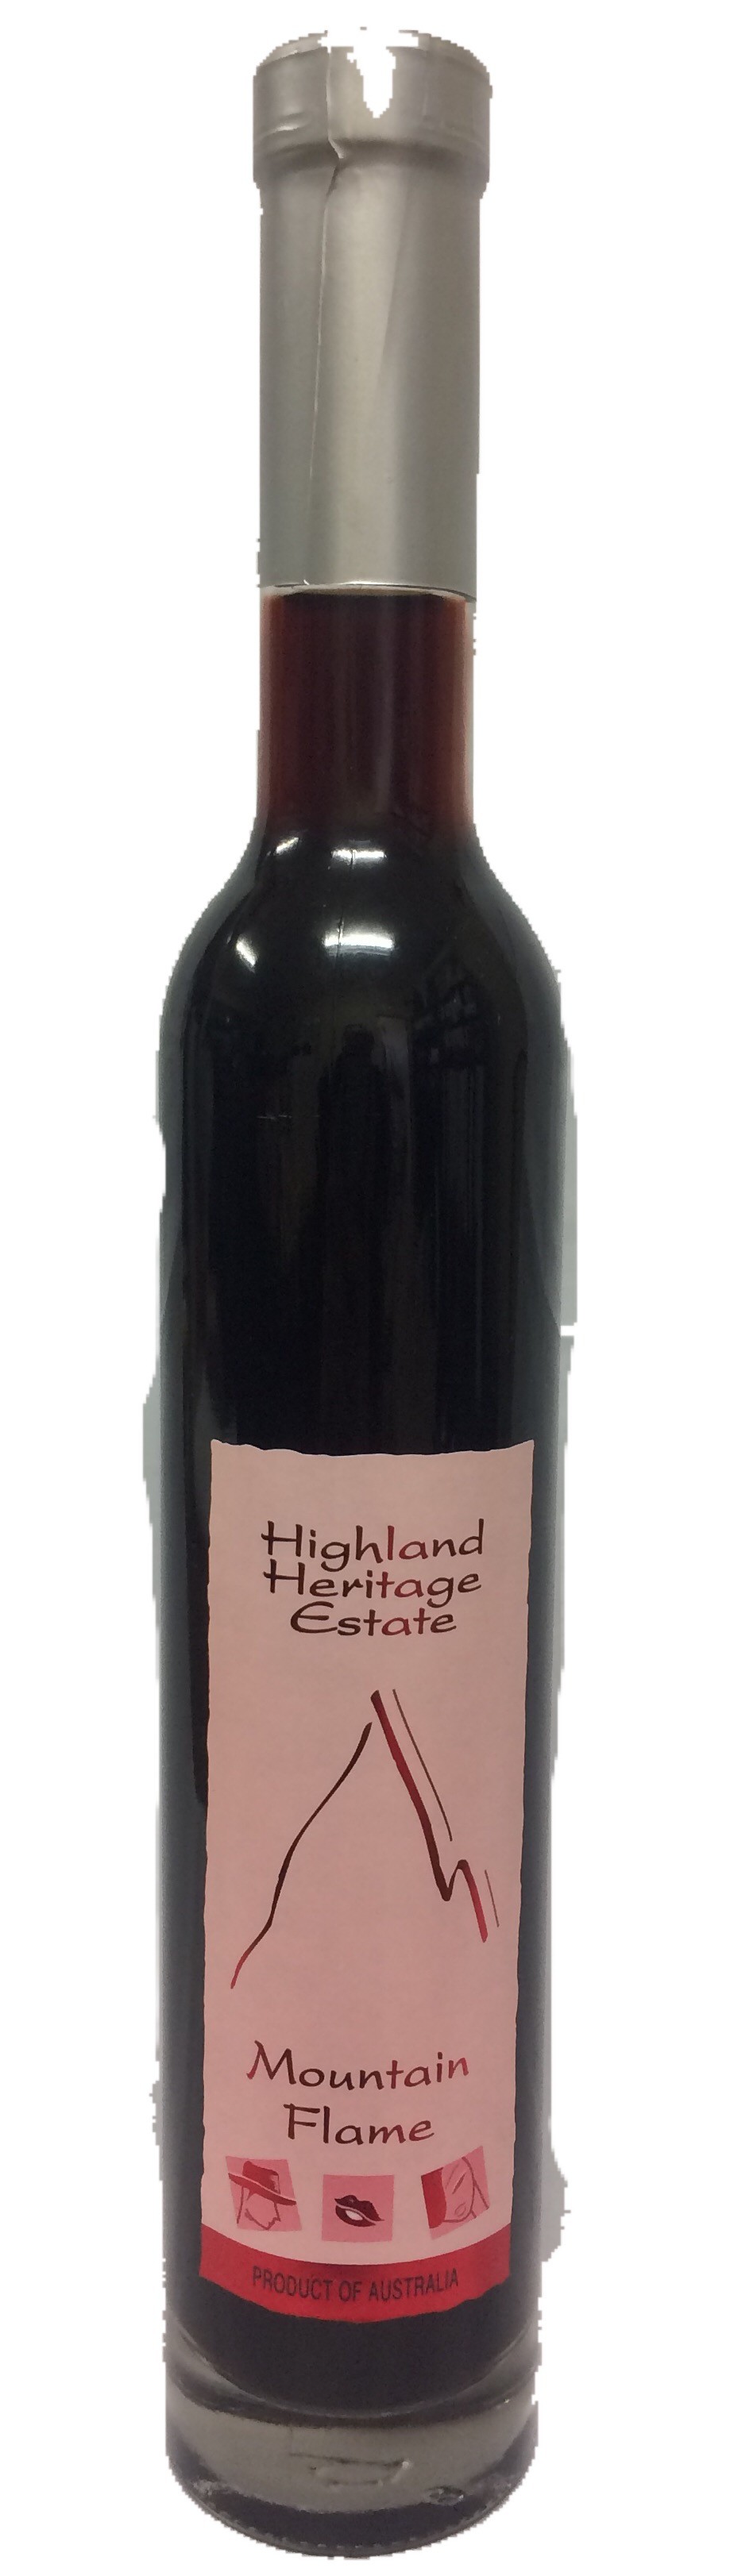 Highland Heritage Estate Mountain Flame Raspberry Liqueur